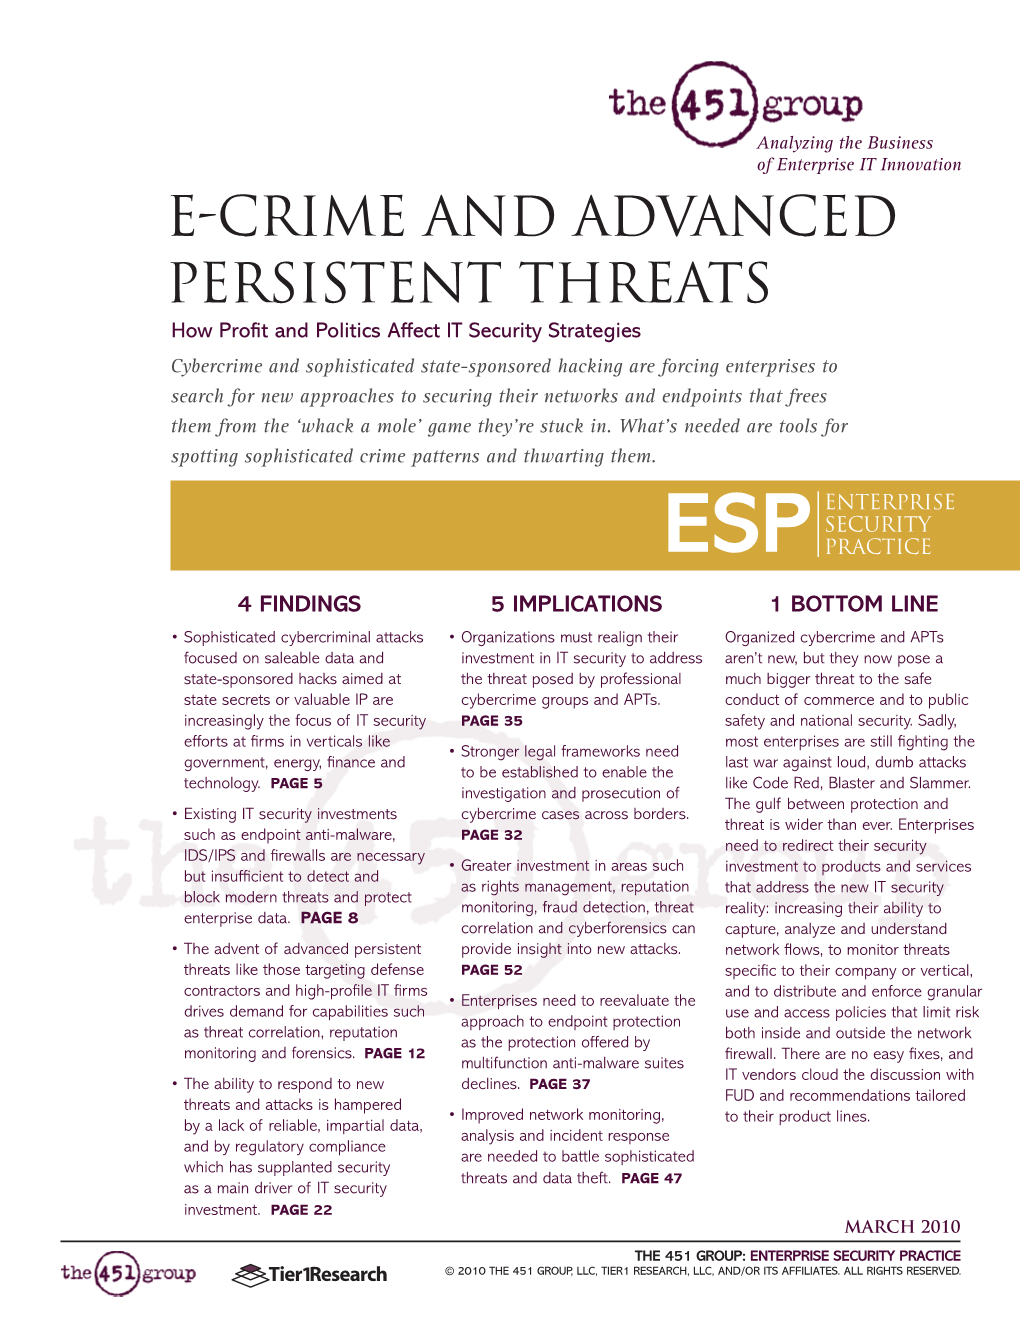 E-Crime and Advanced Persistent Threats